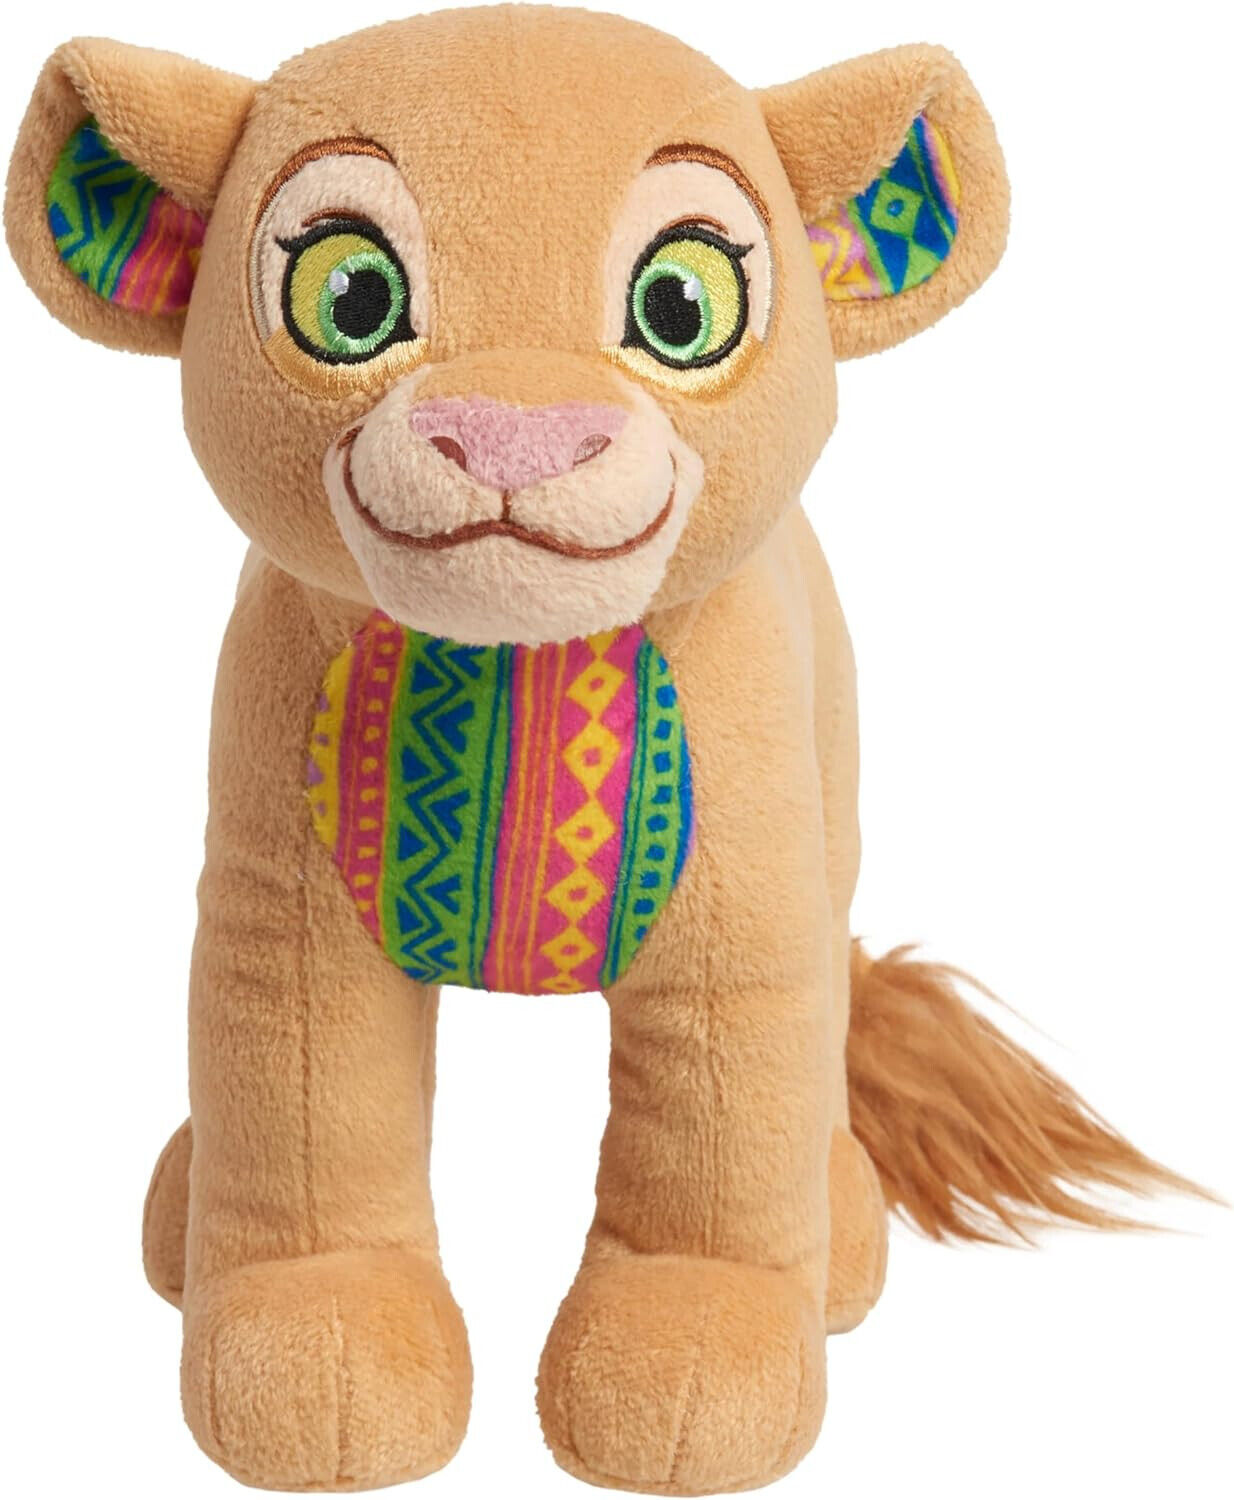 Disney 8” The Lion King Mufasa Movie Nala Plush Toy Doll Plushie Stuffed Animal